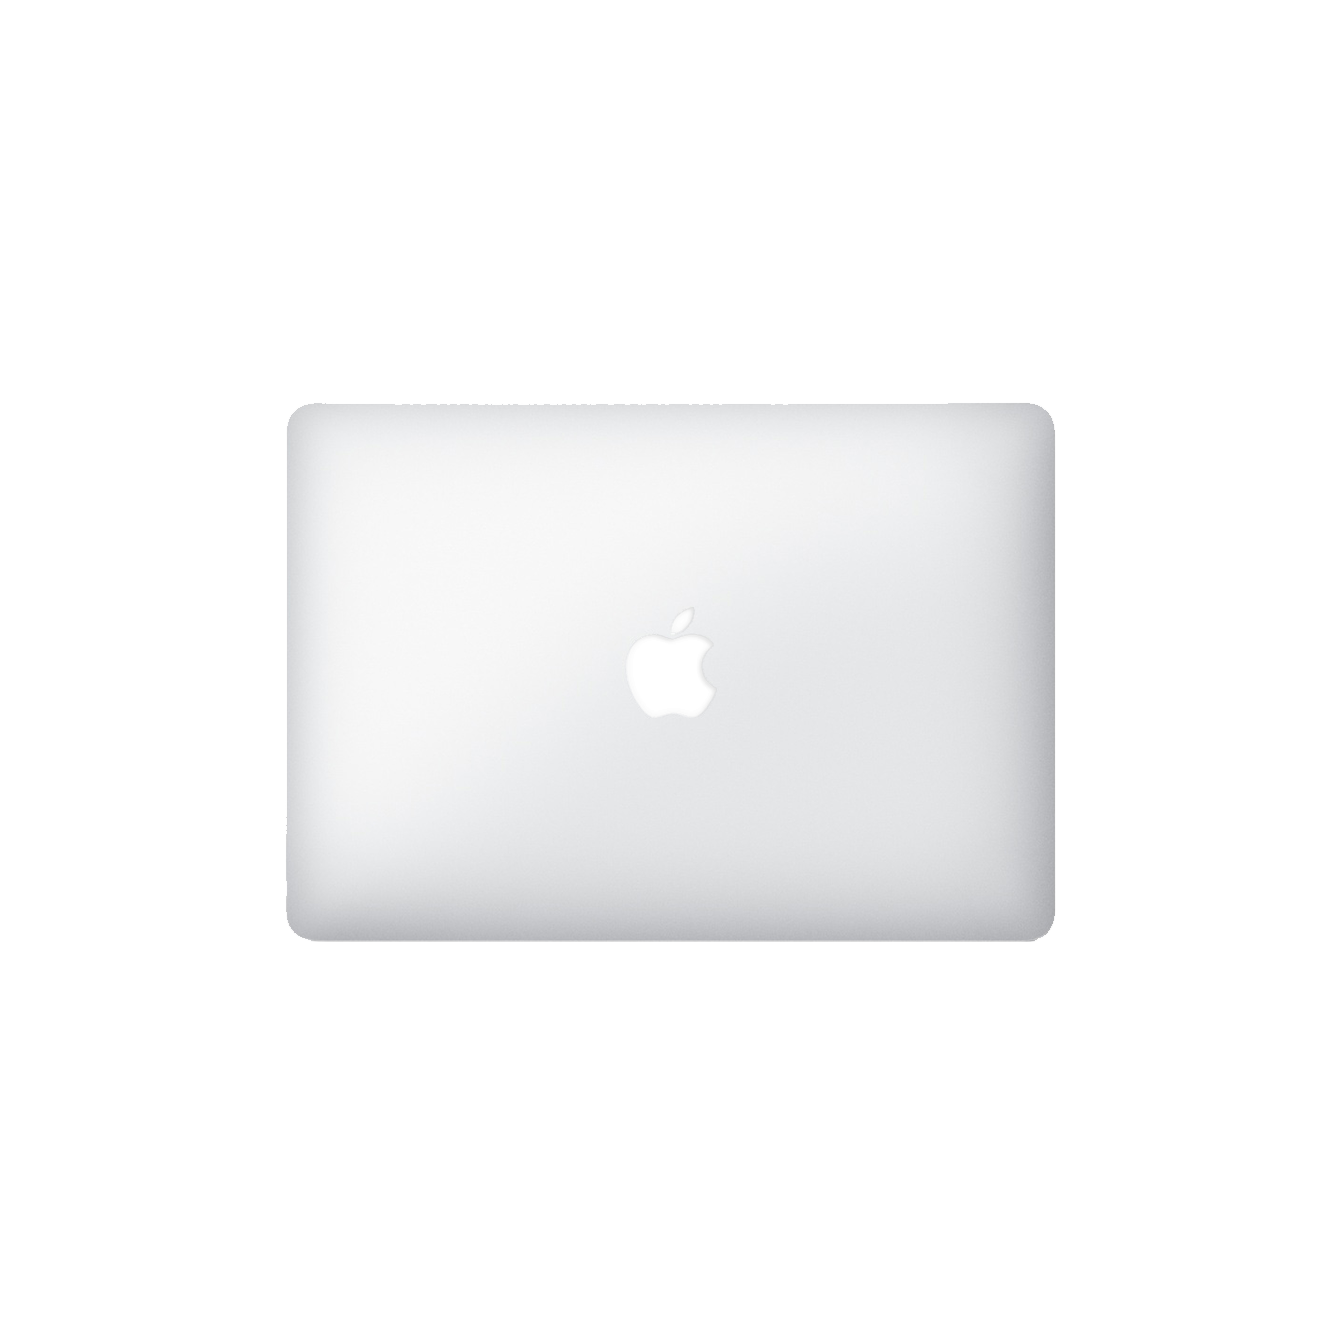 Refurbished MacBook Pro 13" i5 2.7 8GB 256GB 2015